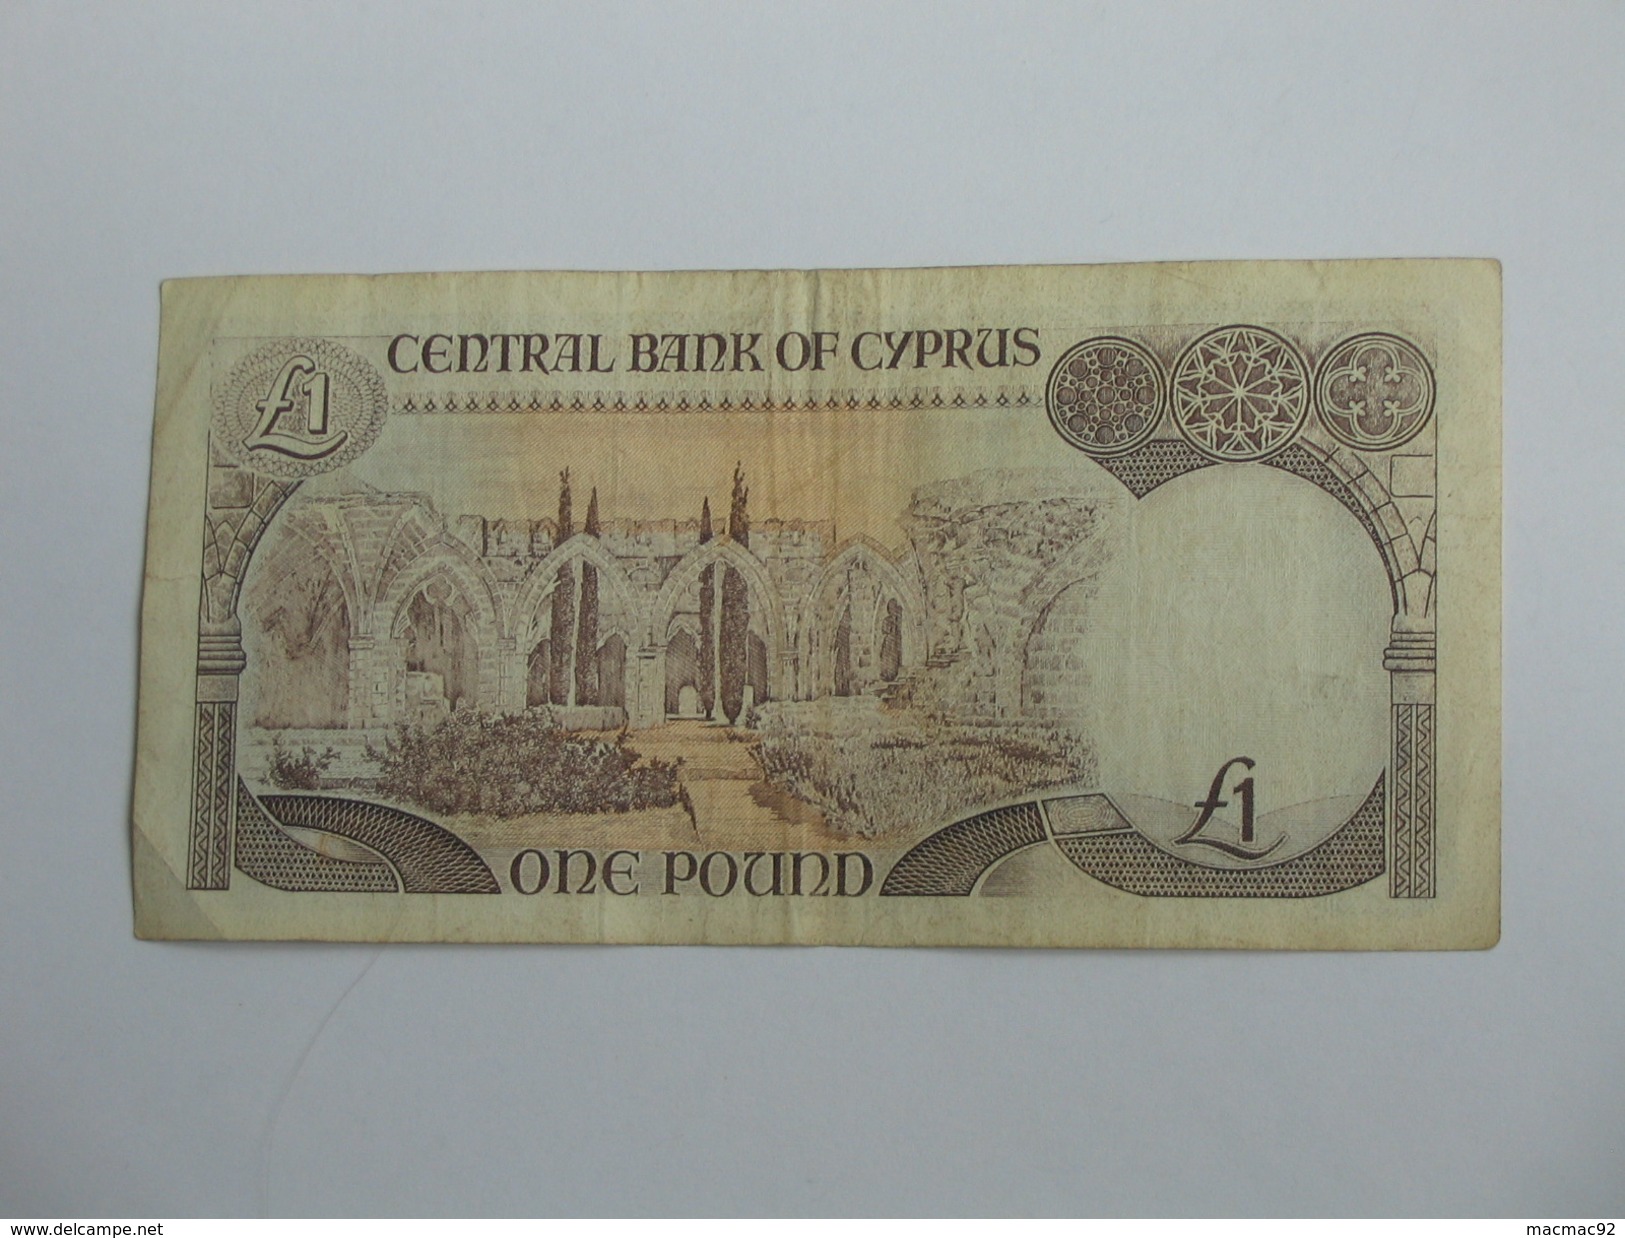 1 One Pound 1994 Central Bank Of Cyprus - CHYPRE **** ACHAT IMMEDIAT *** - Zypern